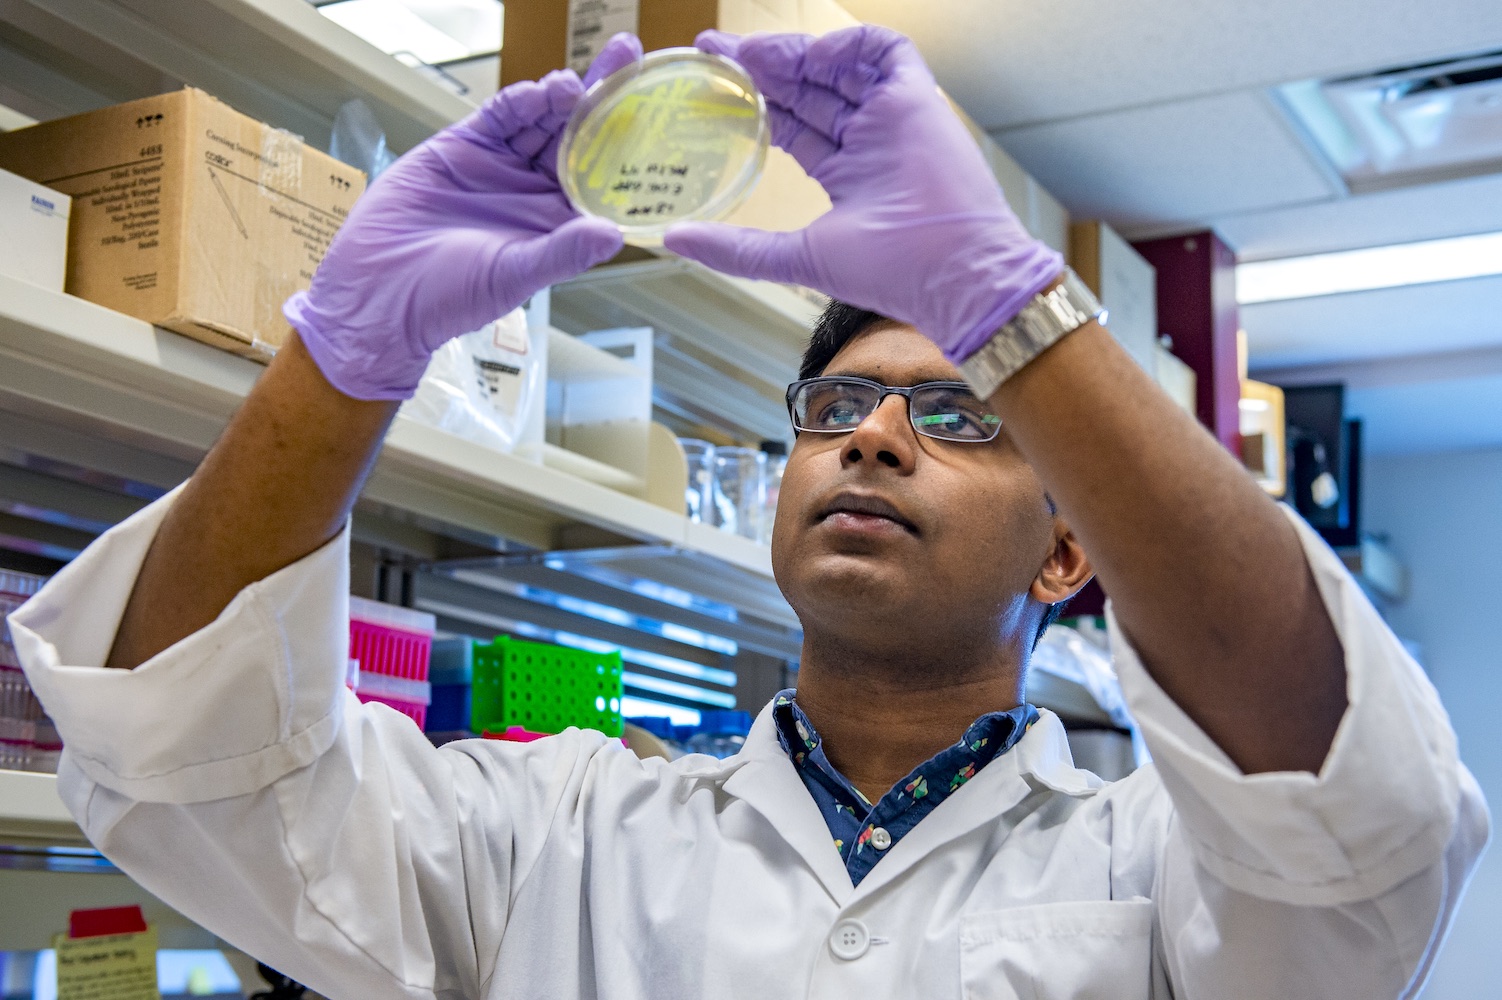 Researcher looks at petri dish in lab